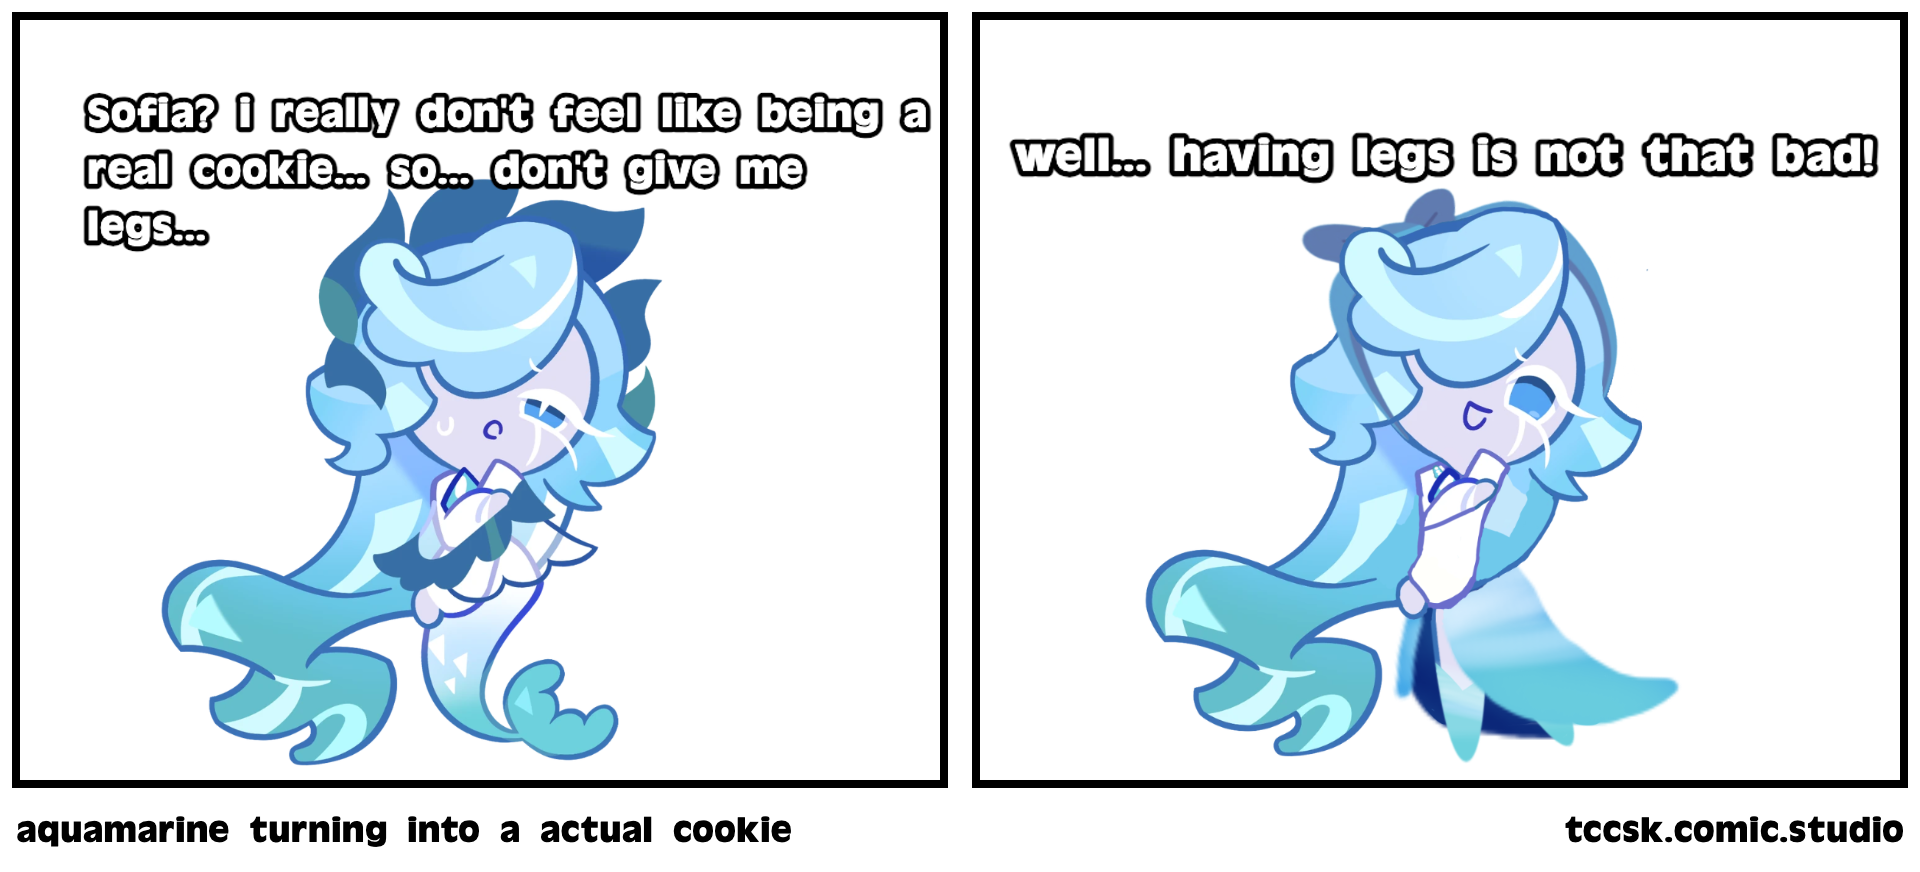 aquamarine turning into a actual cookie